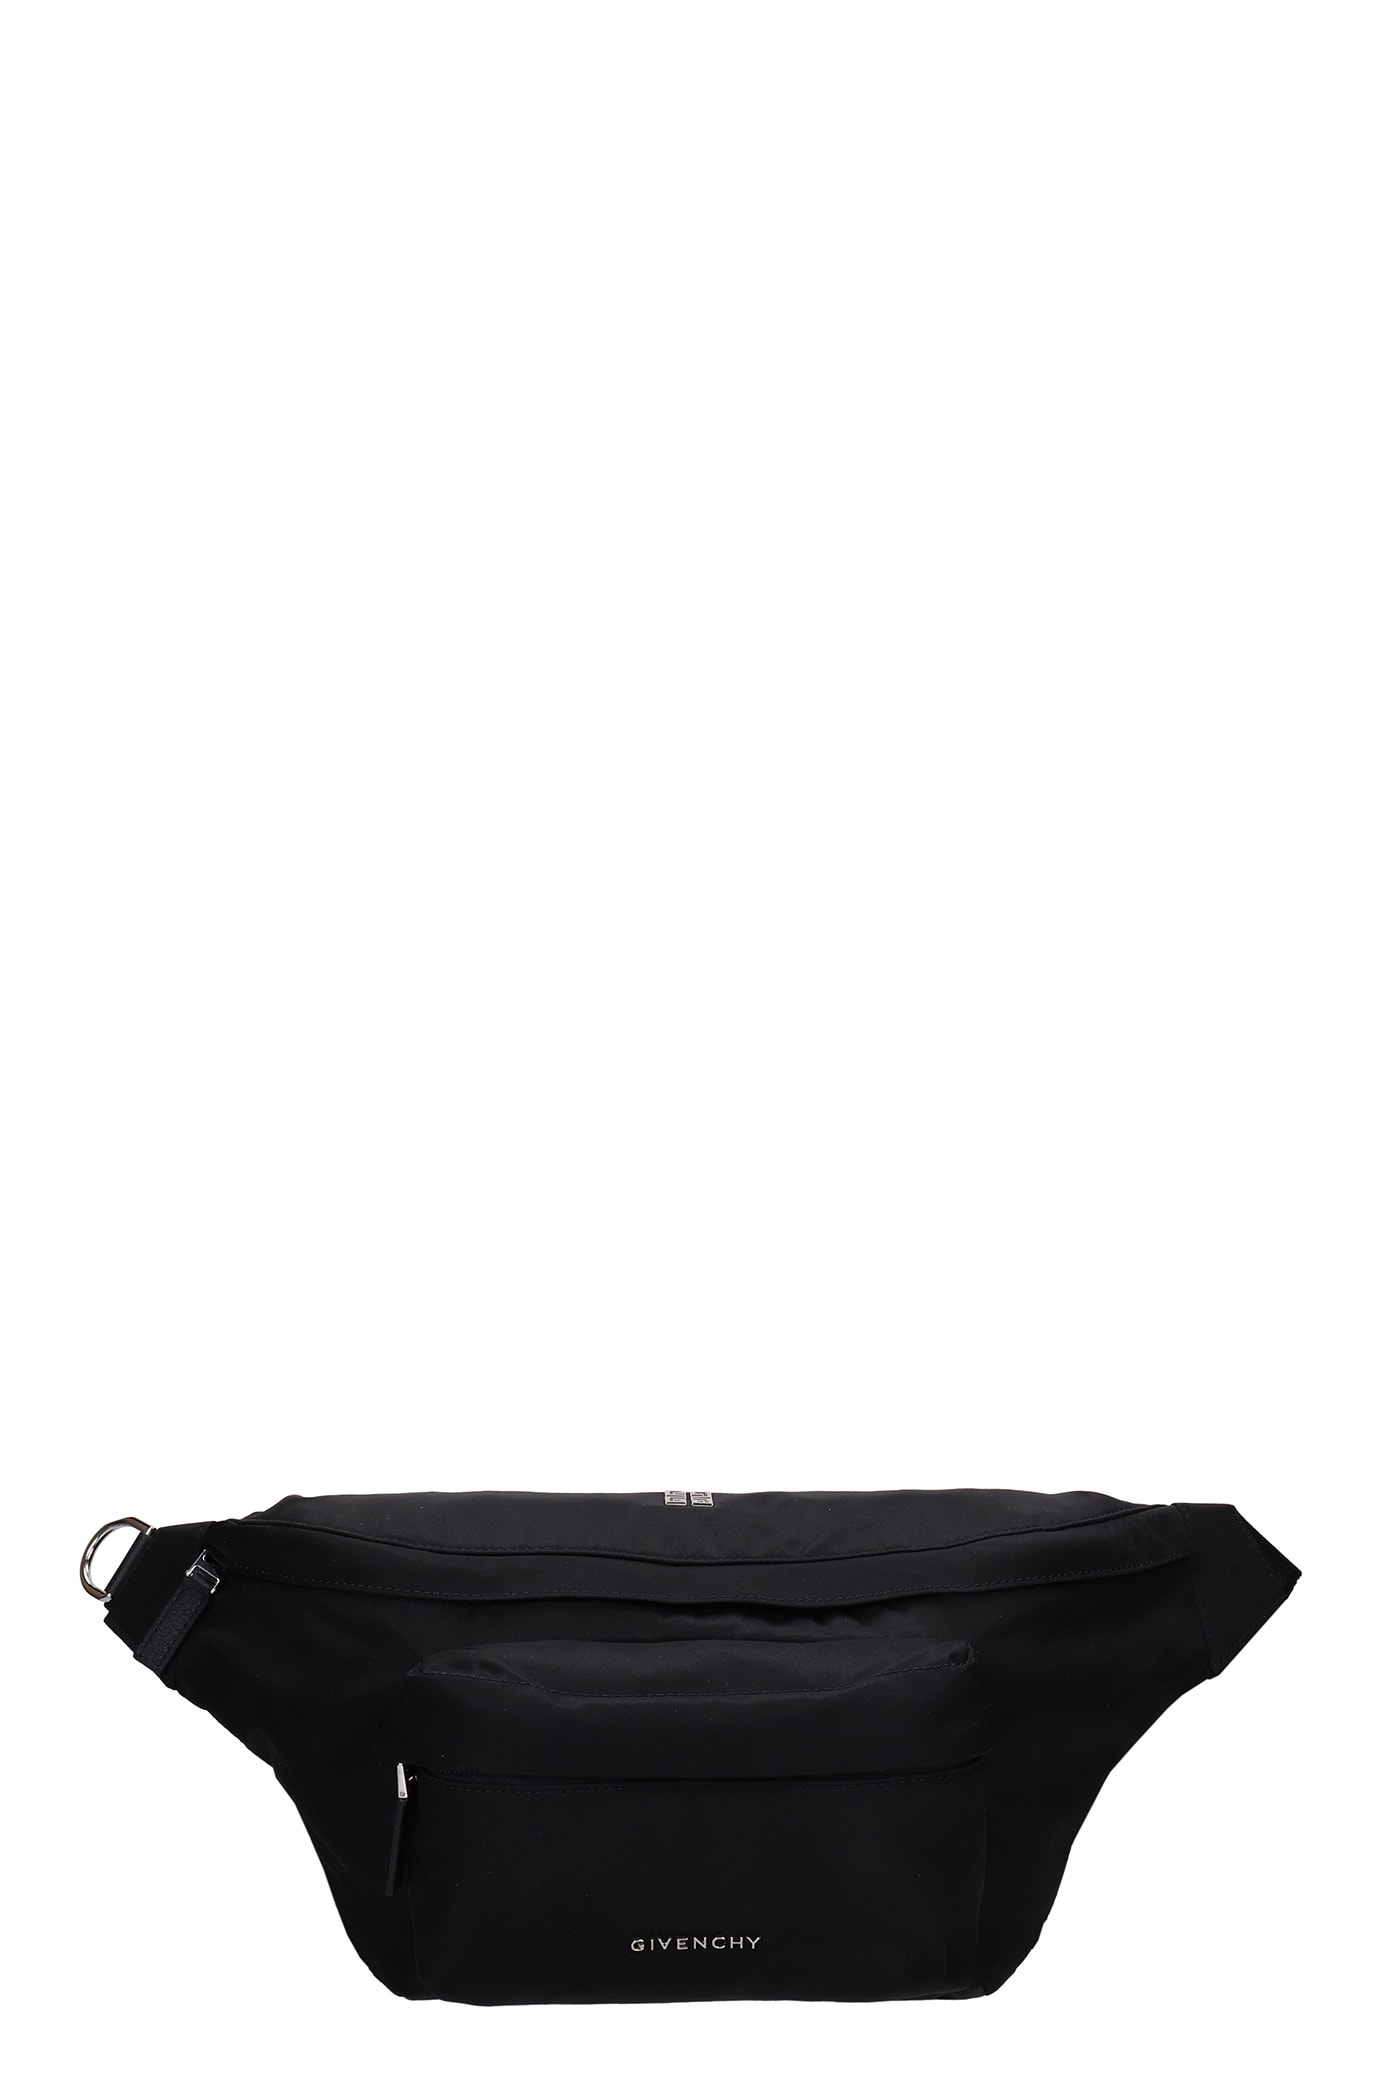 Givenchy Essential Waist Bag In Black Nylon